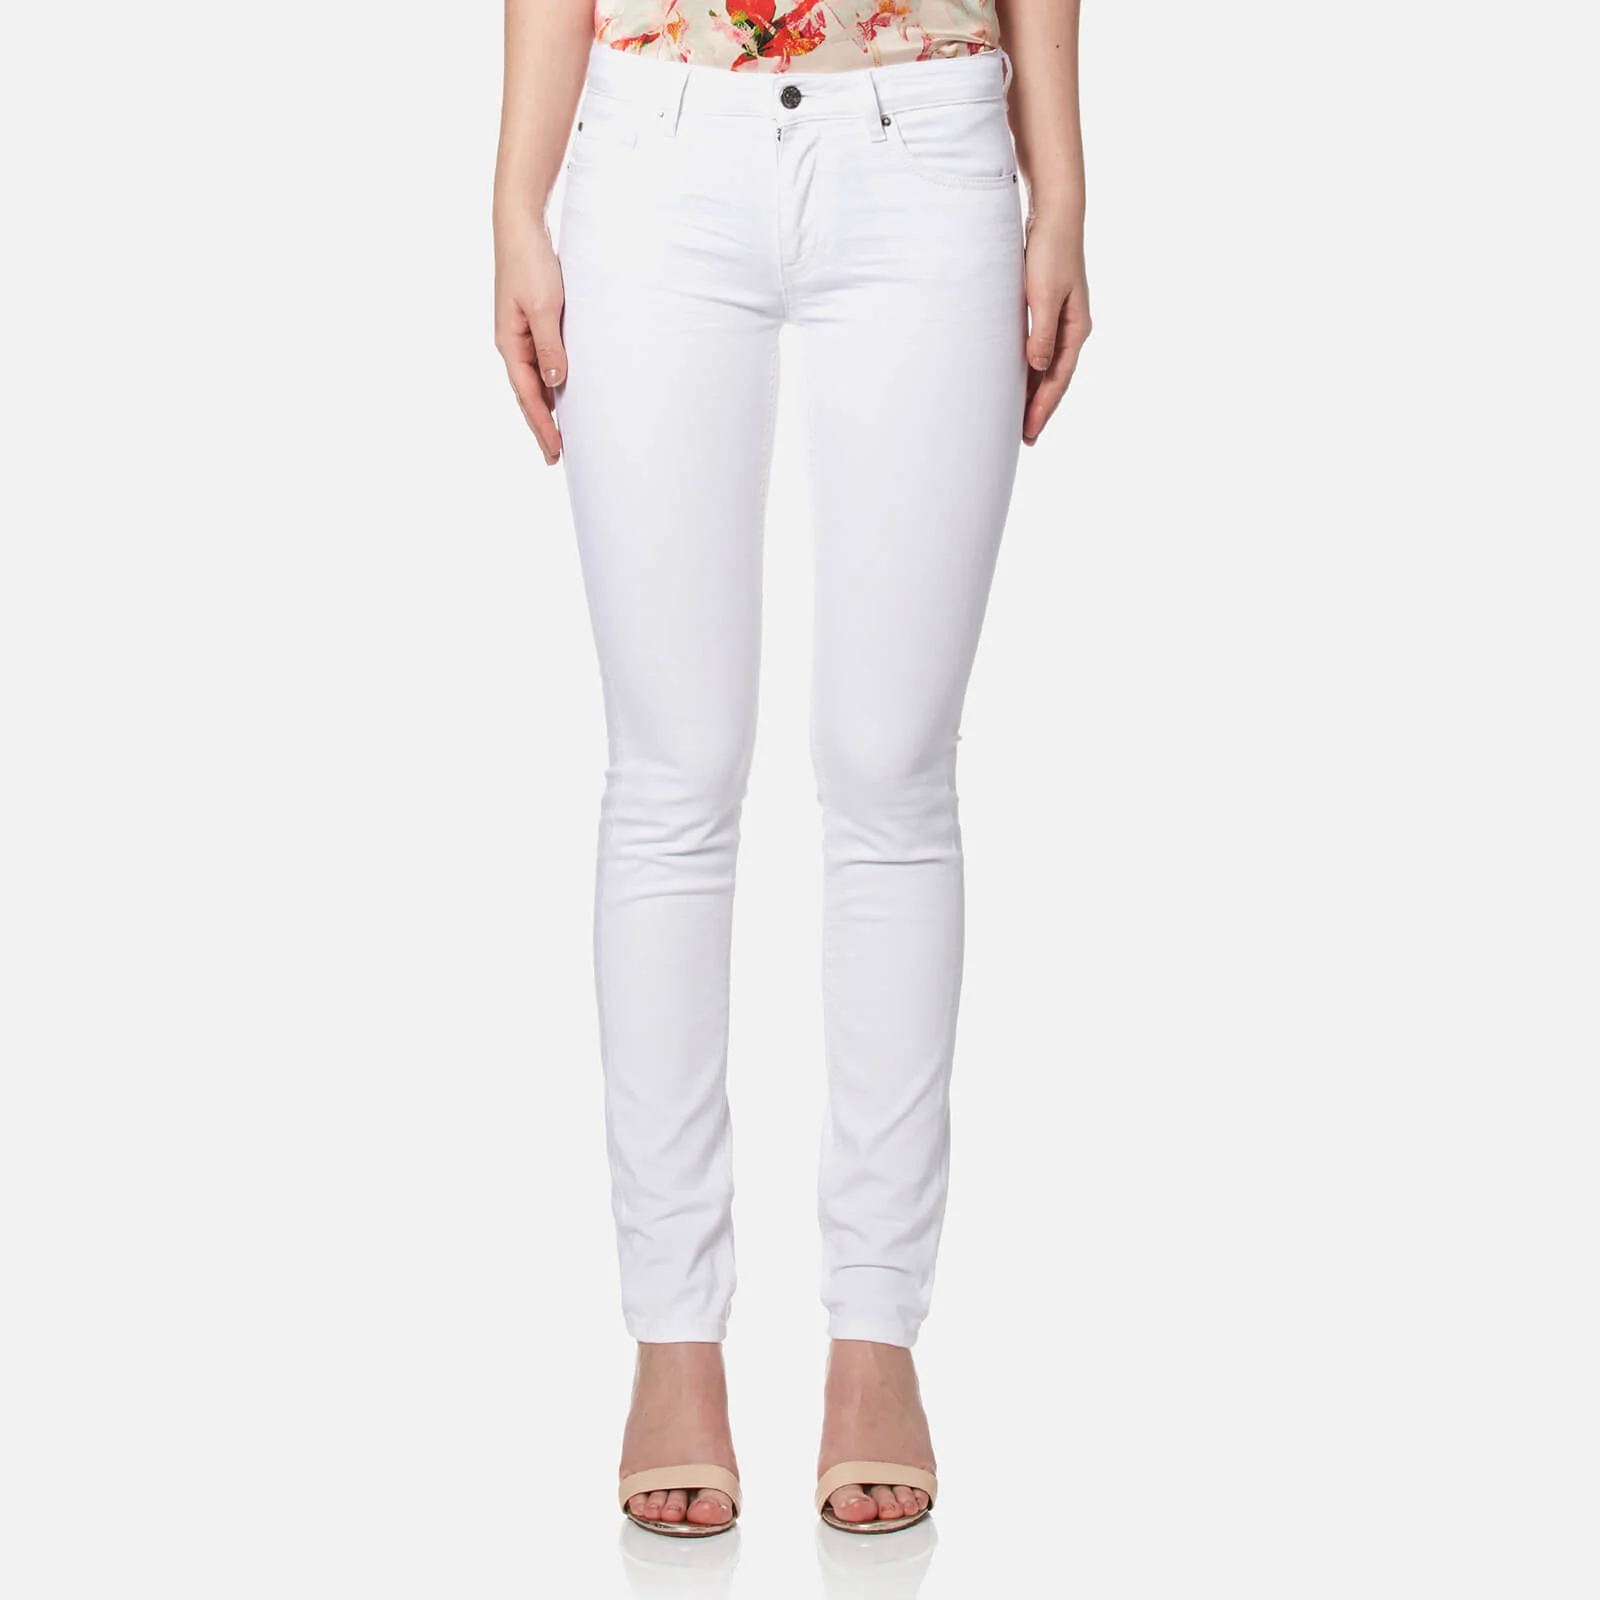 BOSS Orange Women's Orange J20 Liege Jeans - White Image 1